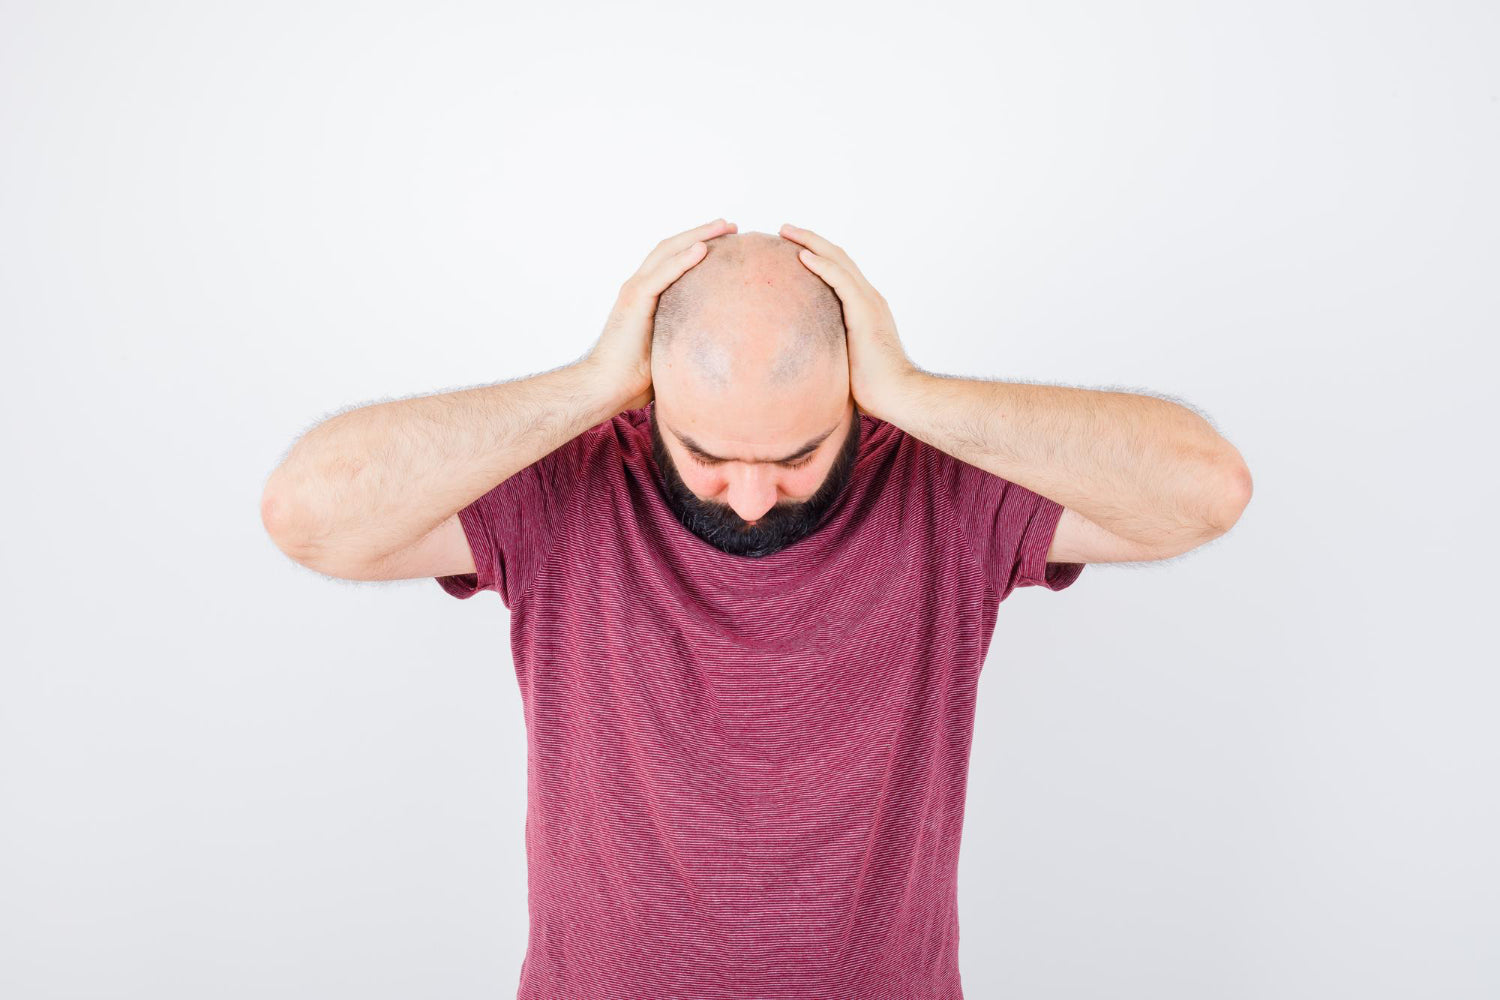 Hair loss in men is solely caused by genetics